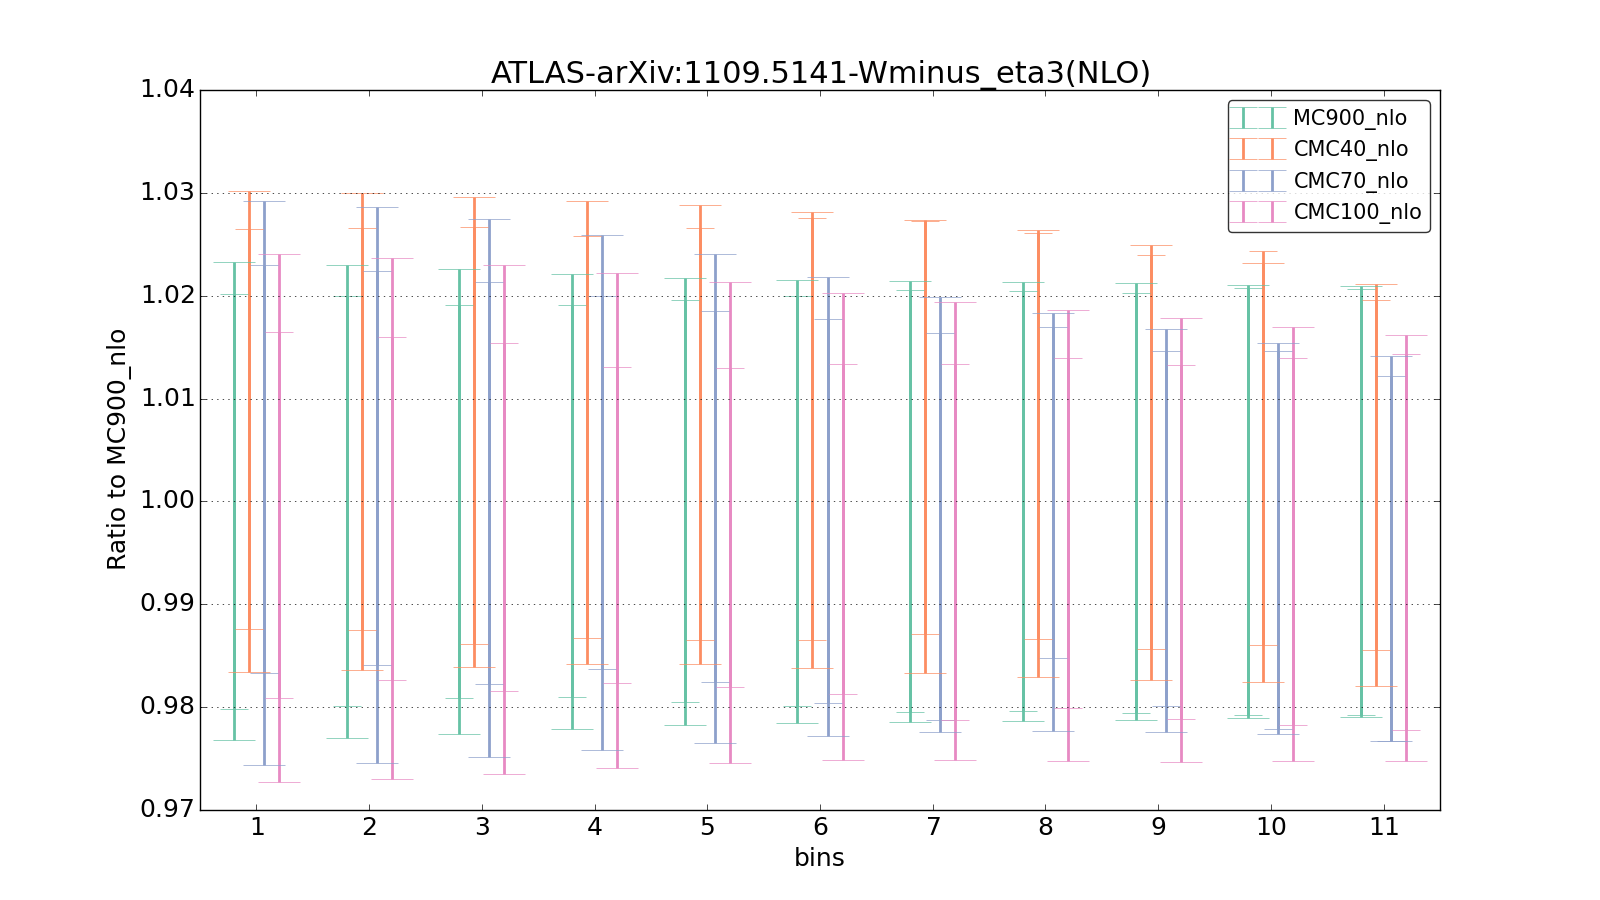 figure plots/CMCpheno/group_1_ciplot_ATLAS-arXiv:11095141-Wminus_eta3(NLO).png